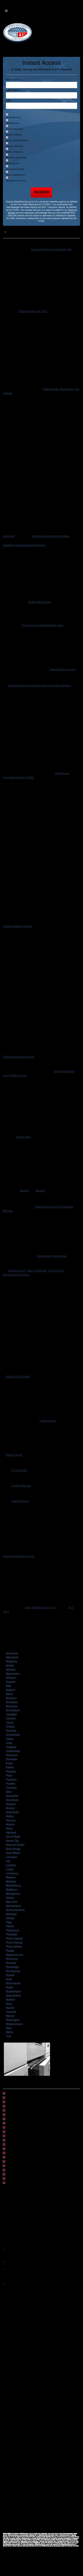 Virginia State Records - Norfolk VA Lawyers